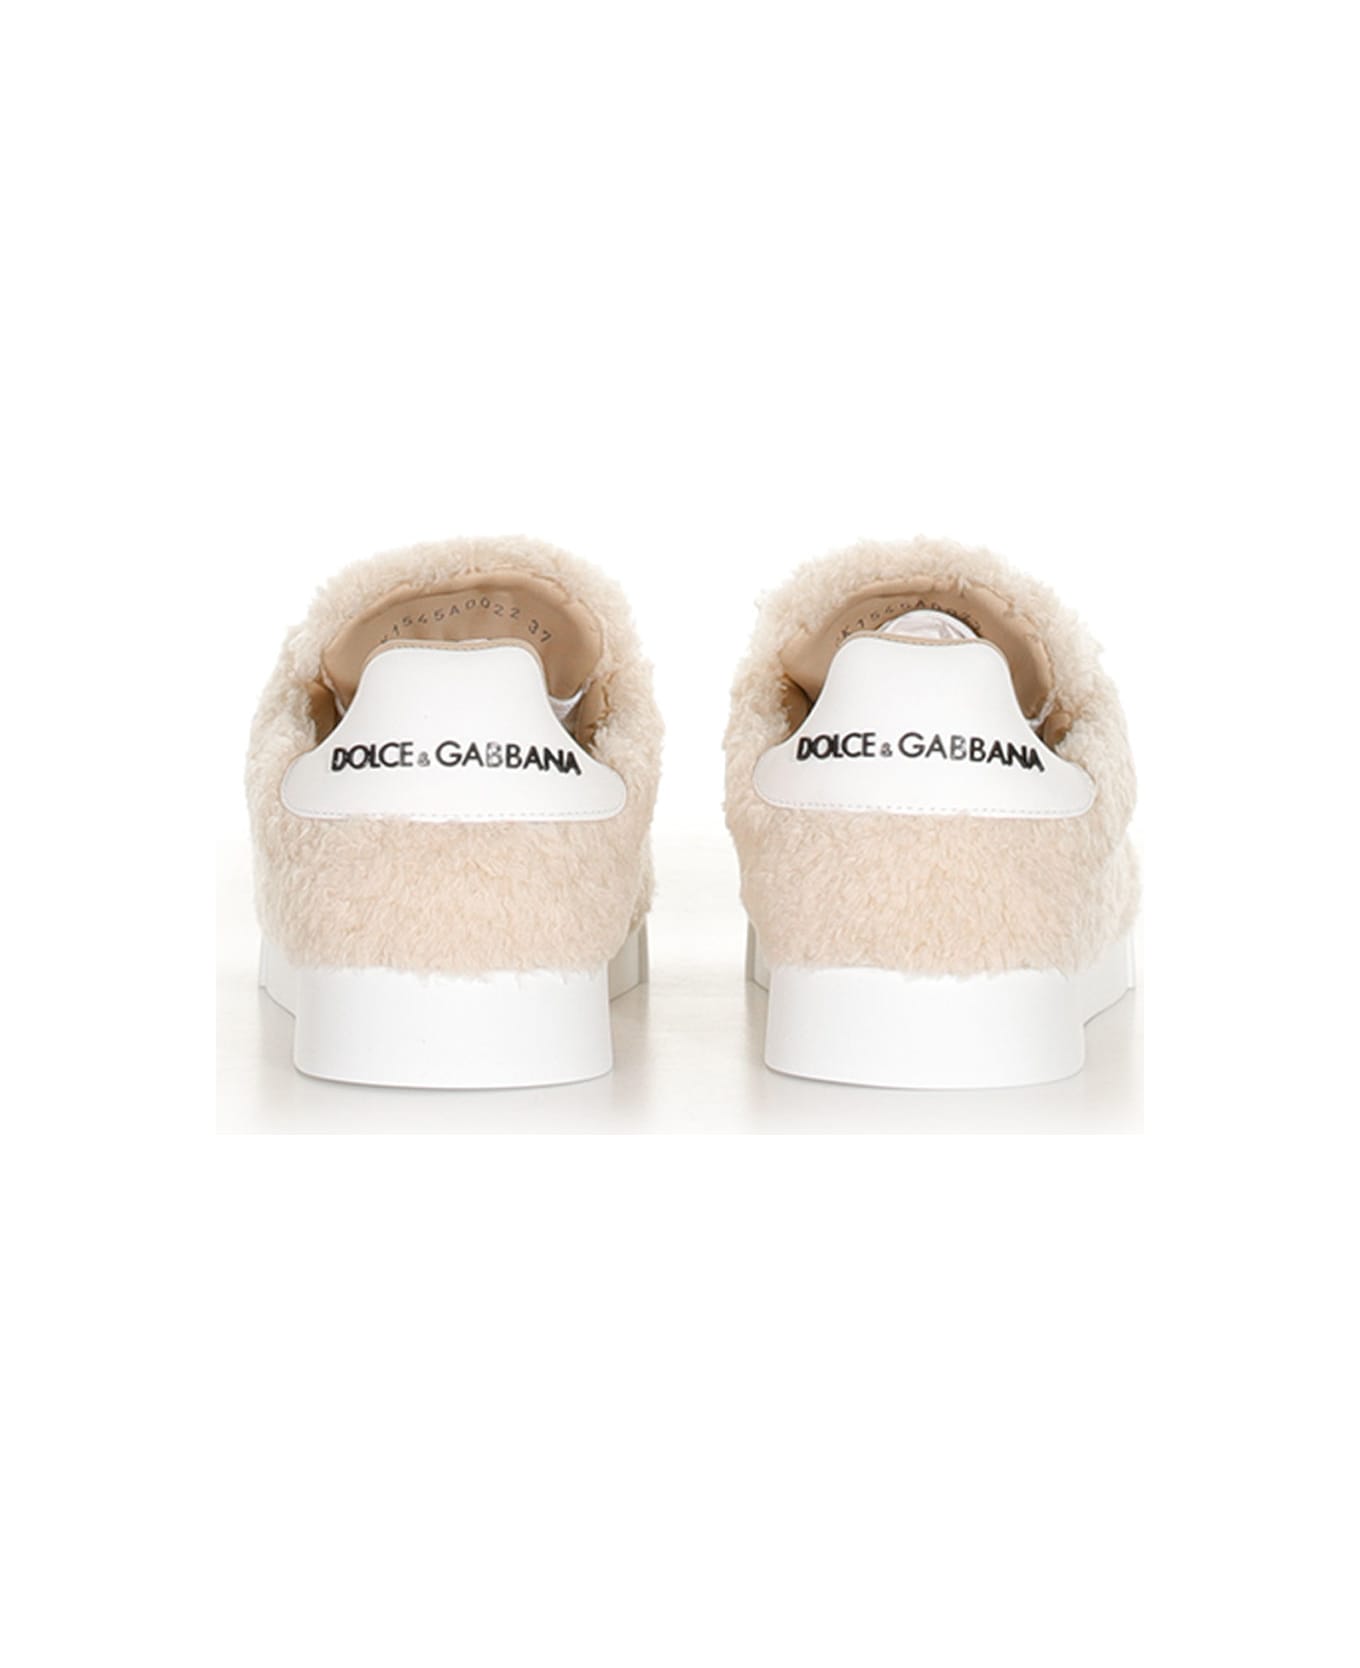 Dolce & Gabbana Fur Coated Logo Sneakers - Caffe Bianco